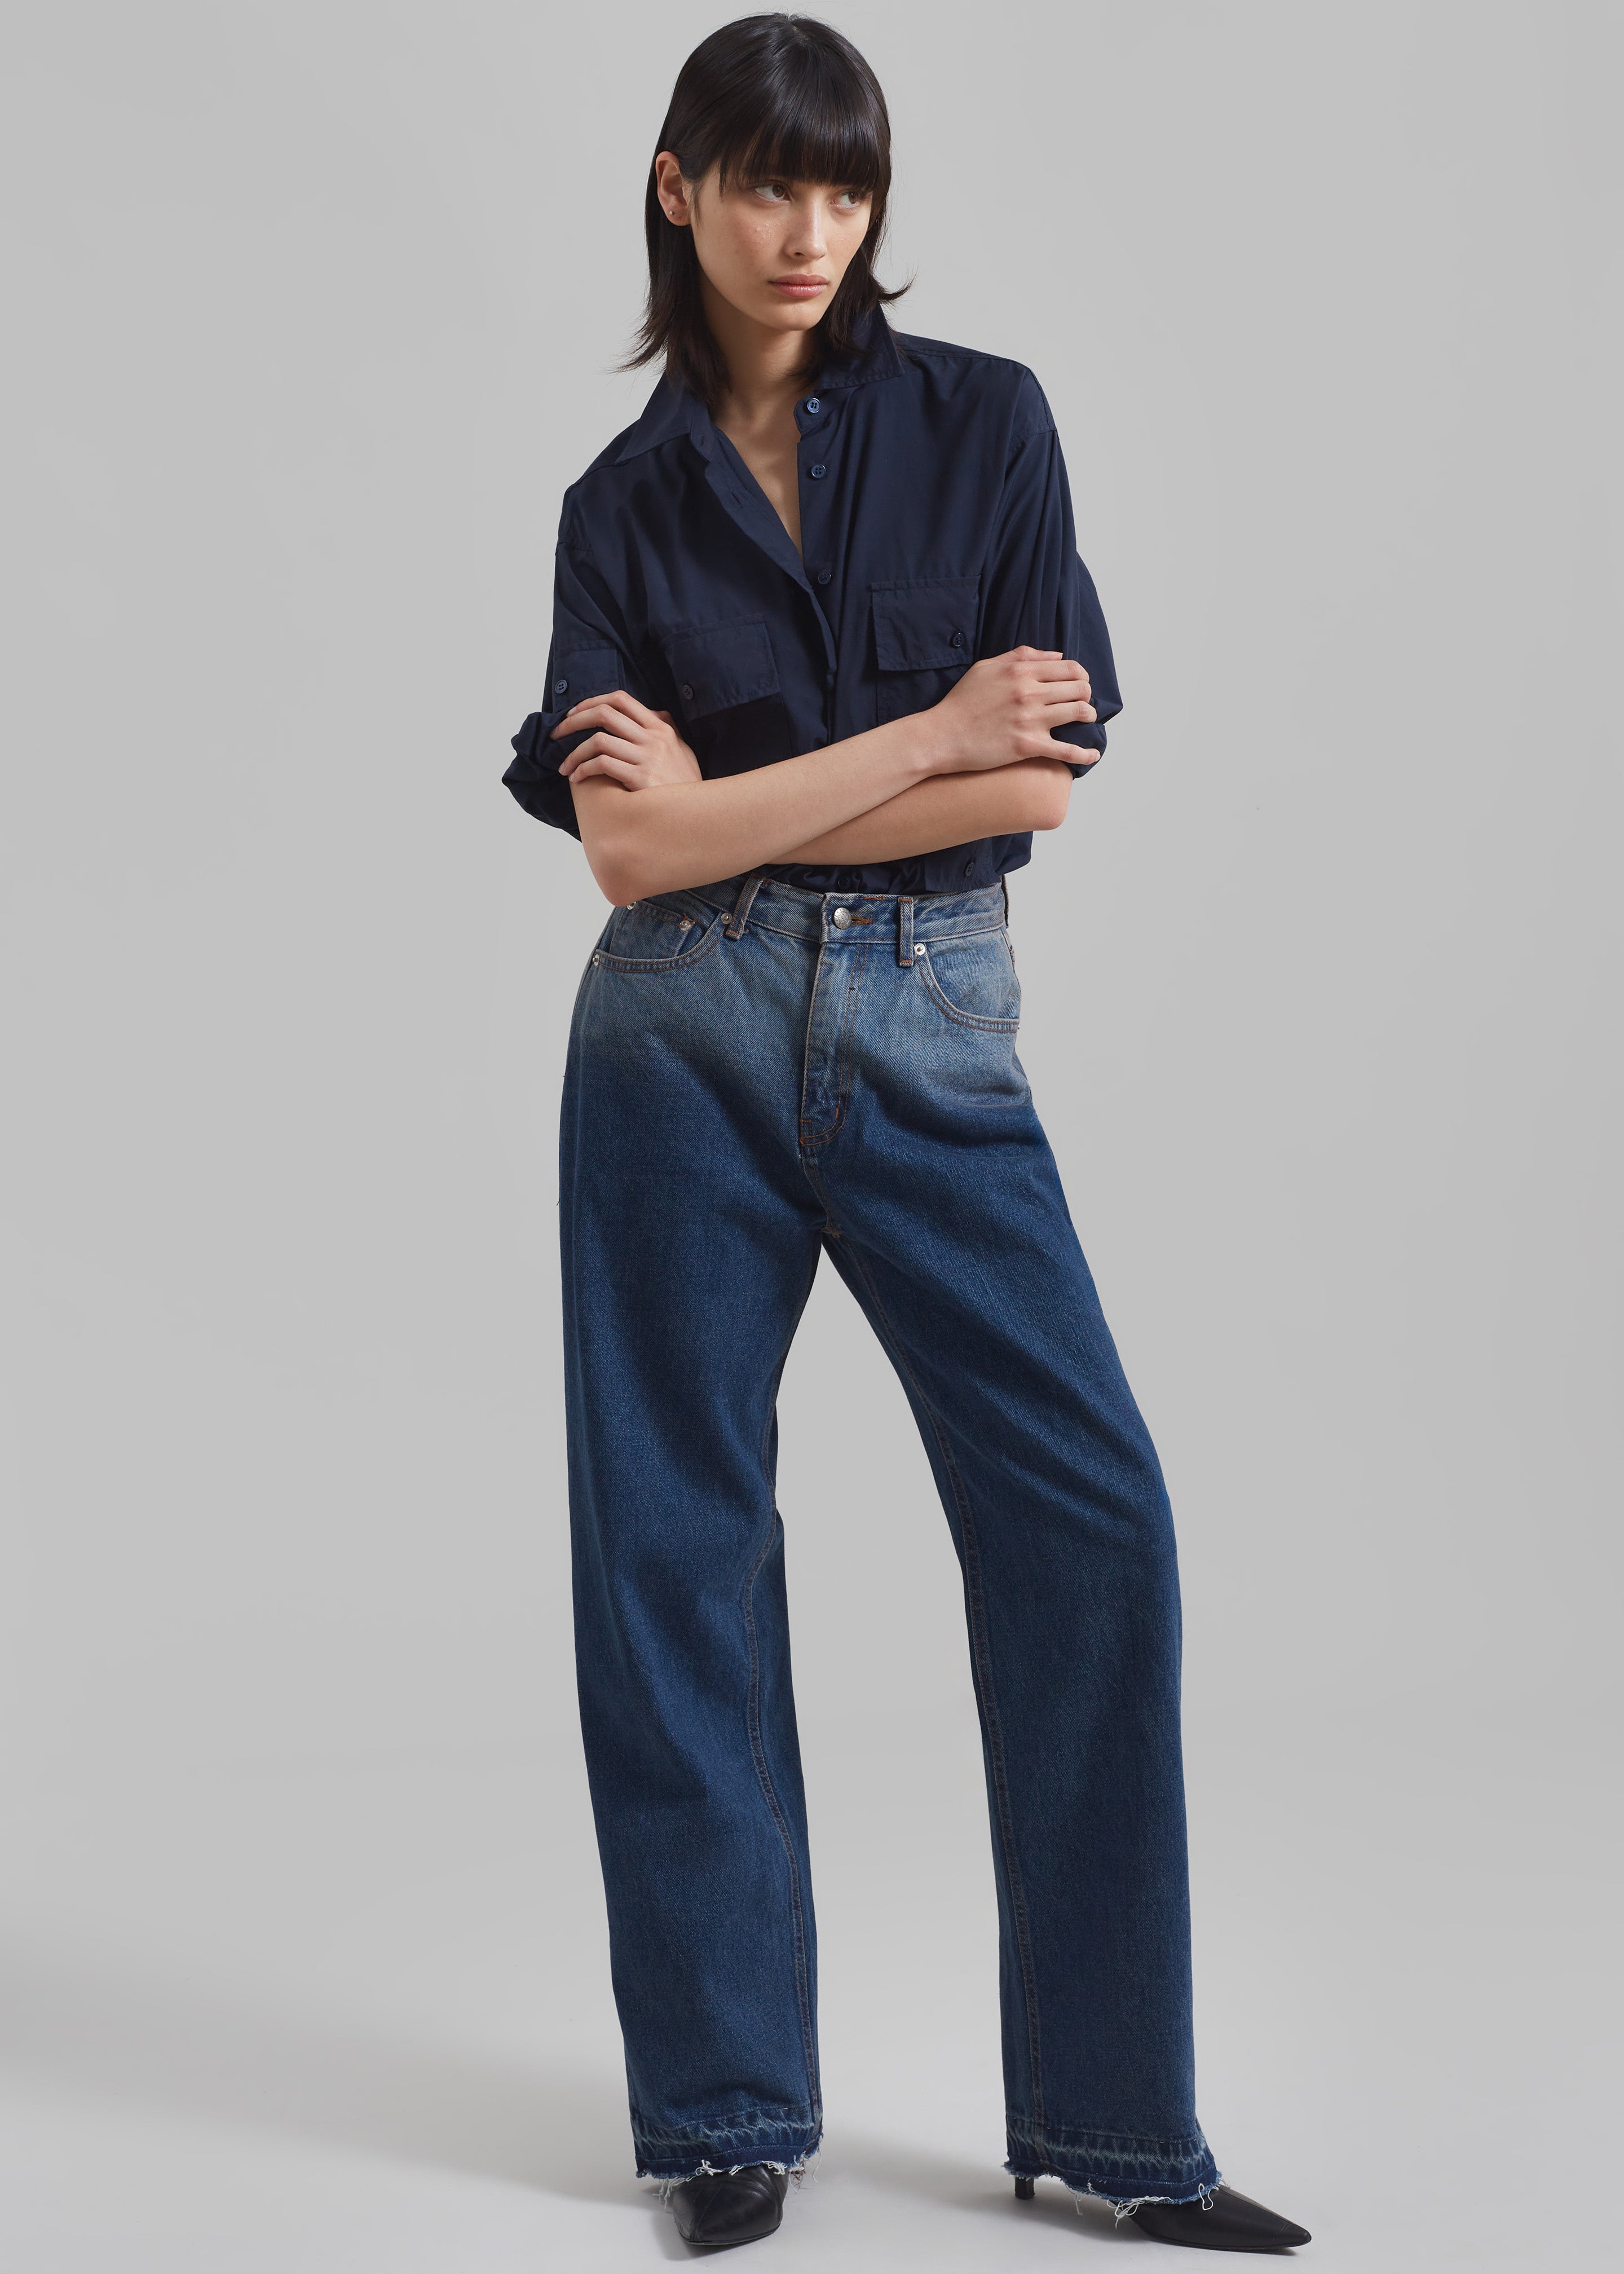 Myla Ombre Jeans - Medium Wash - 1